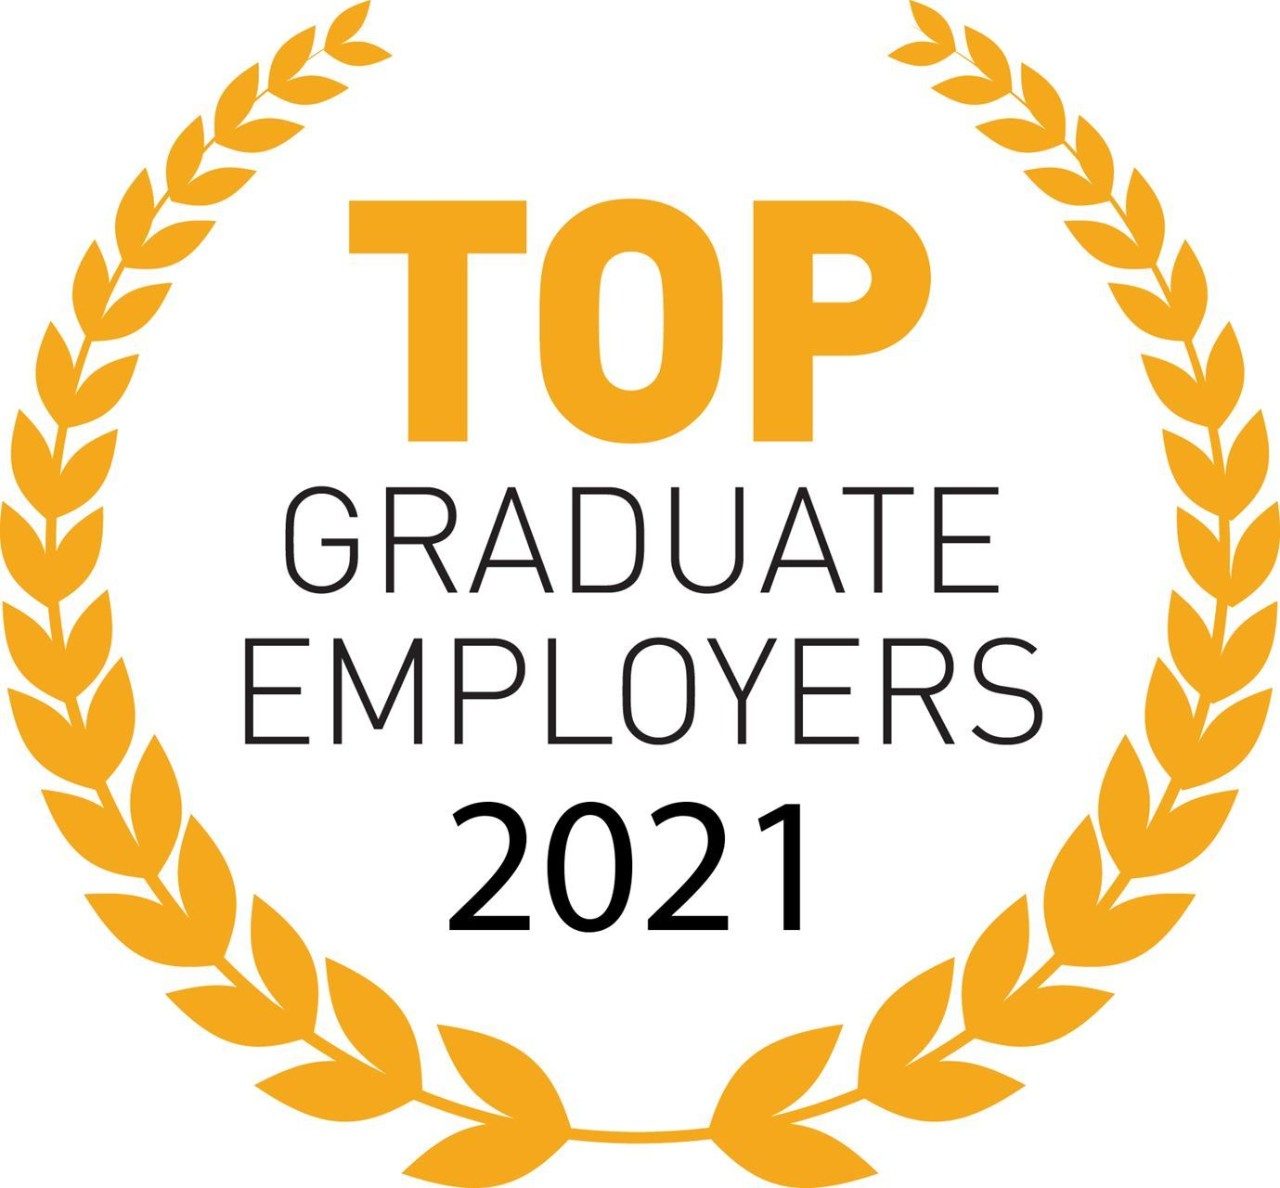 Top Graduate Employers 2021